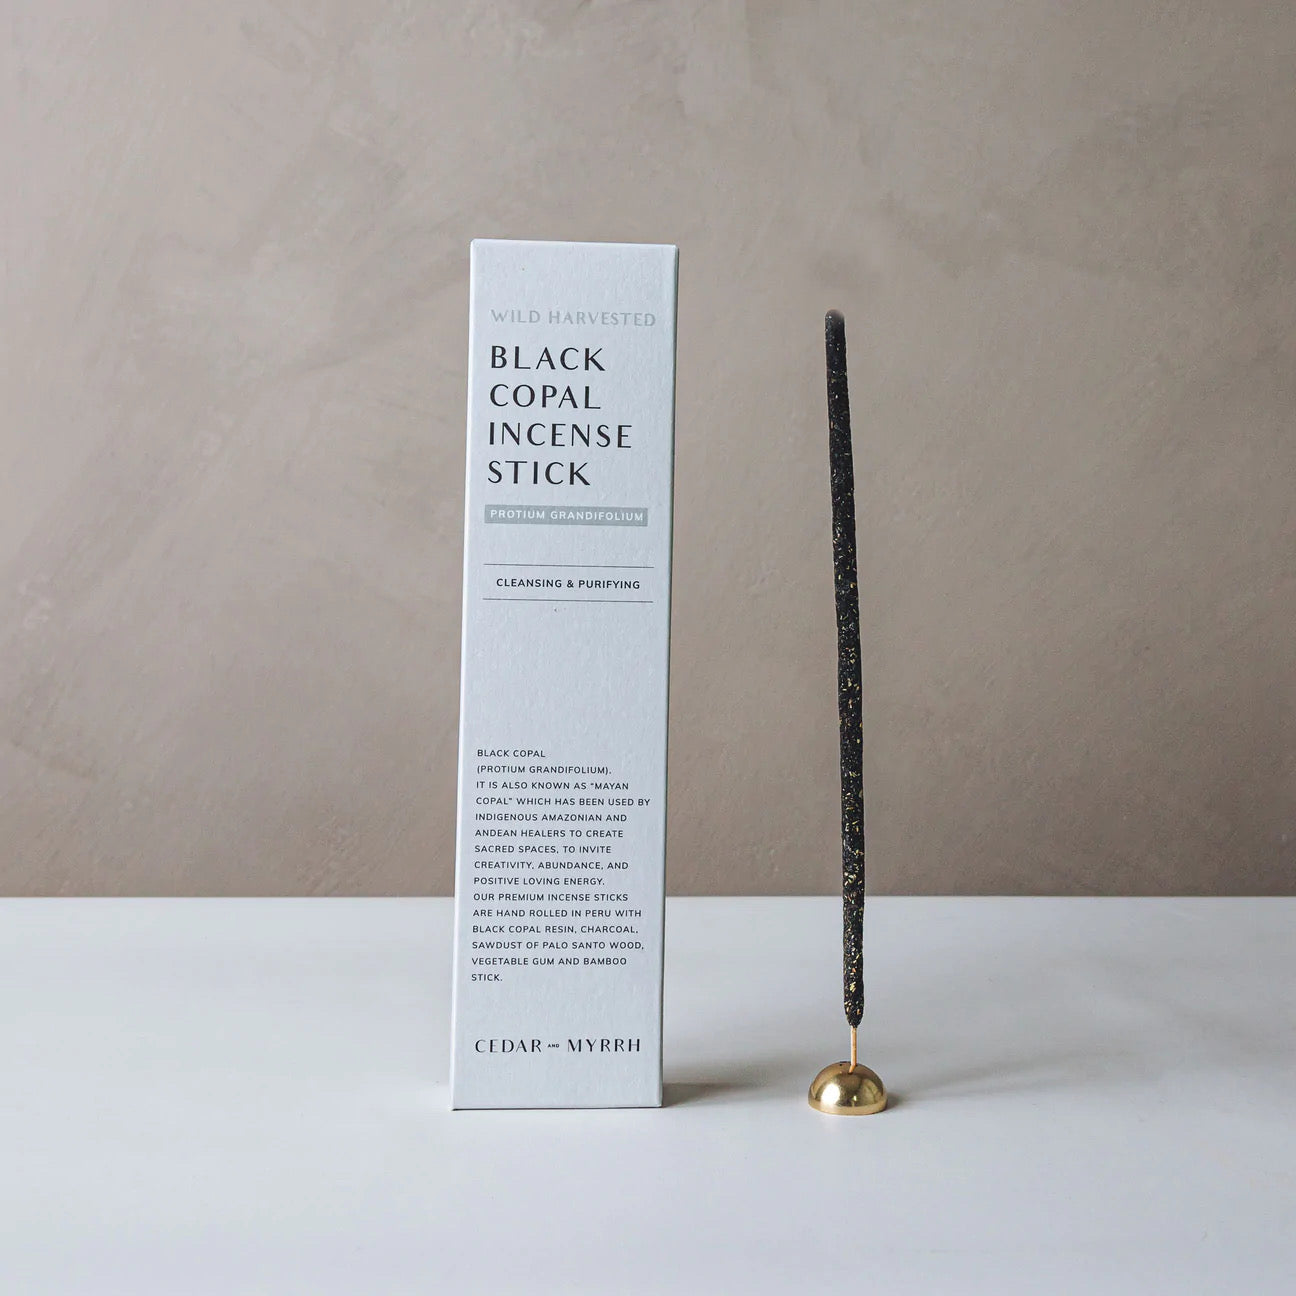 black copal incense stick by Cedar & Myrrh